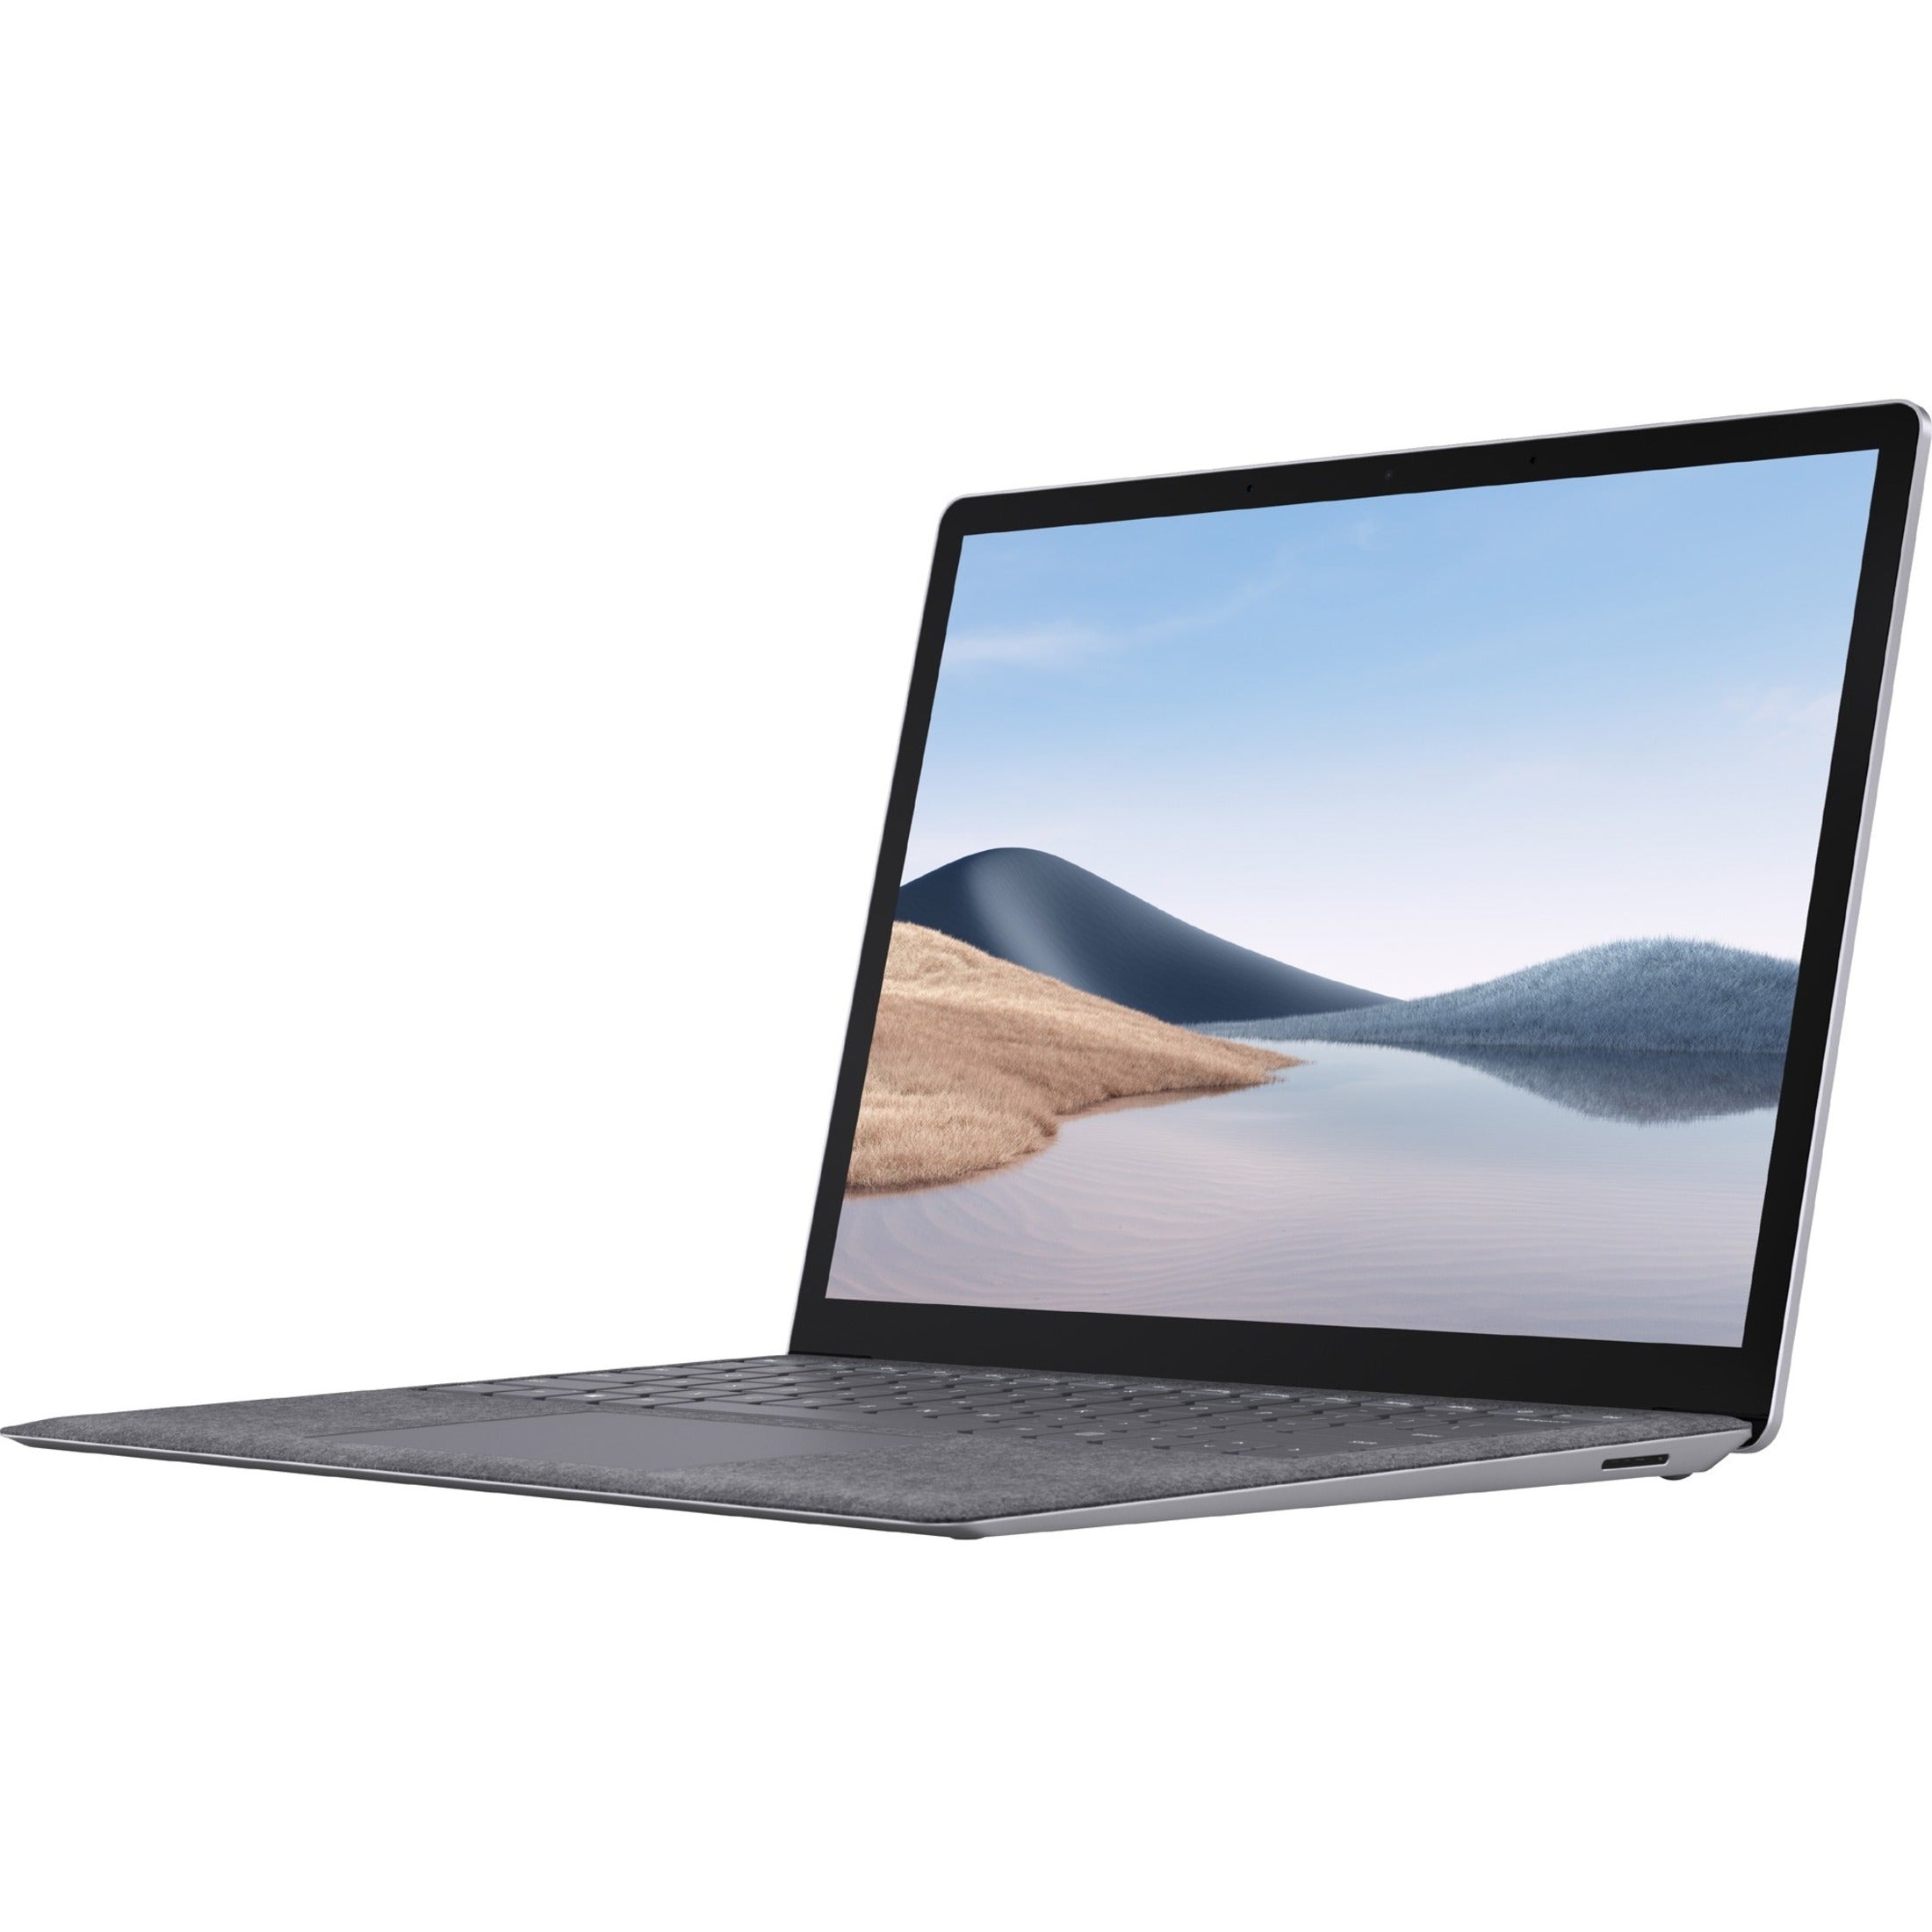 Microsoft 5BV-00035 Surface Laptop 4 Notebook, 13.5, i5, 8GB RAM, 512GB SSD, Windows 10 Pro